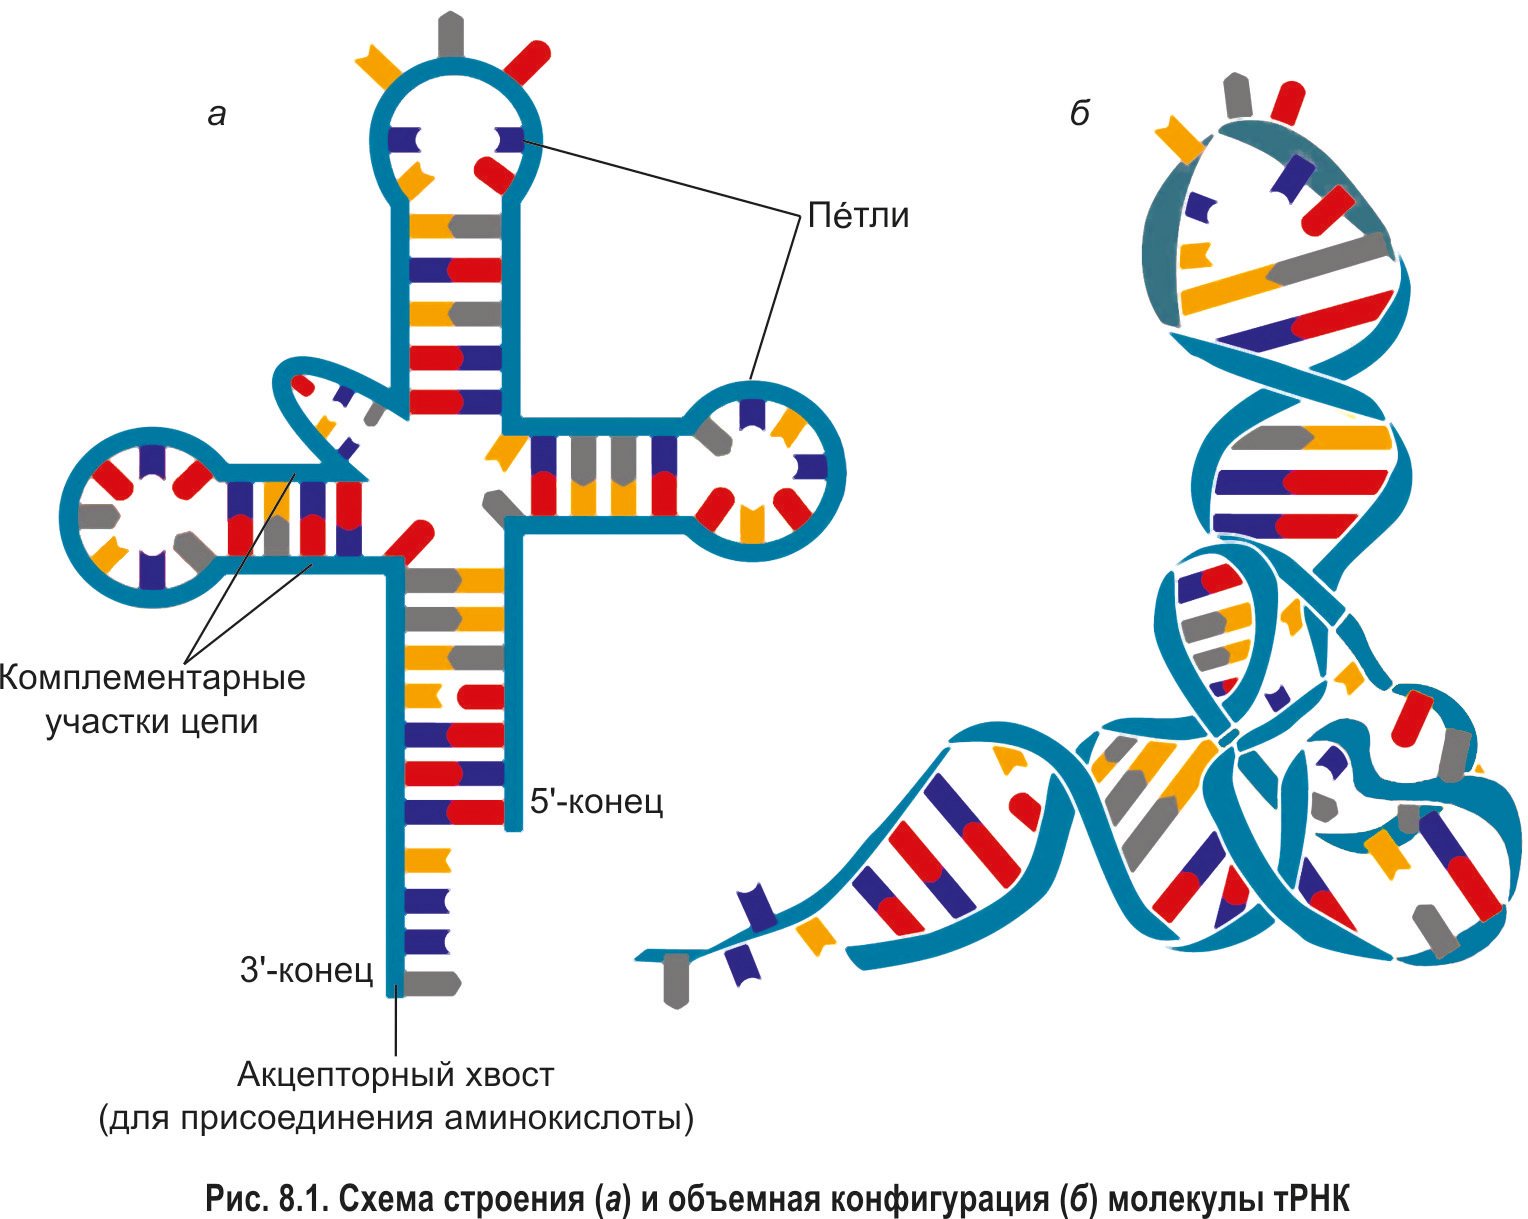 Молекула рнк представлена. Структура транспортной РНК. Структура т РНК. Строение молекулы ТРНК. Трехмерная структура ТРНК.